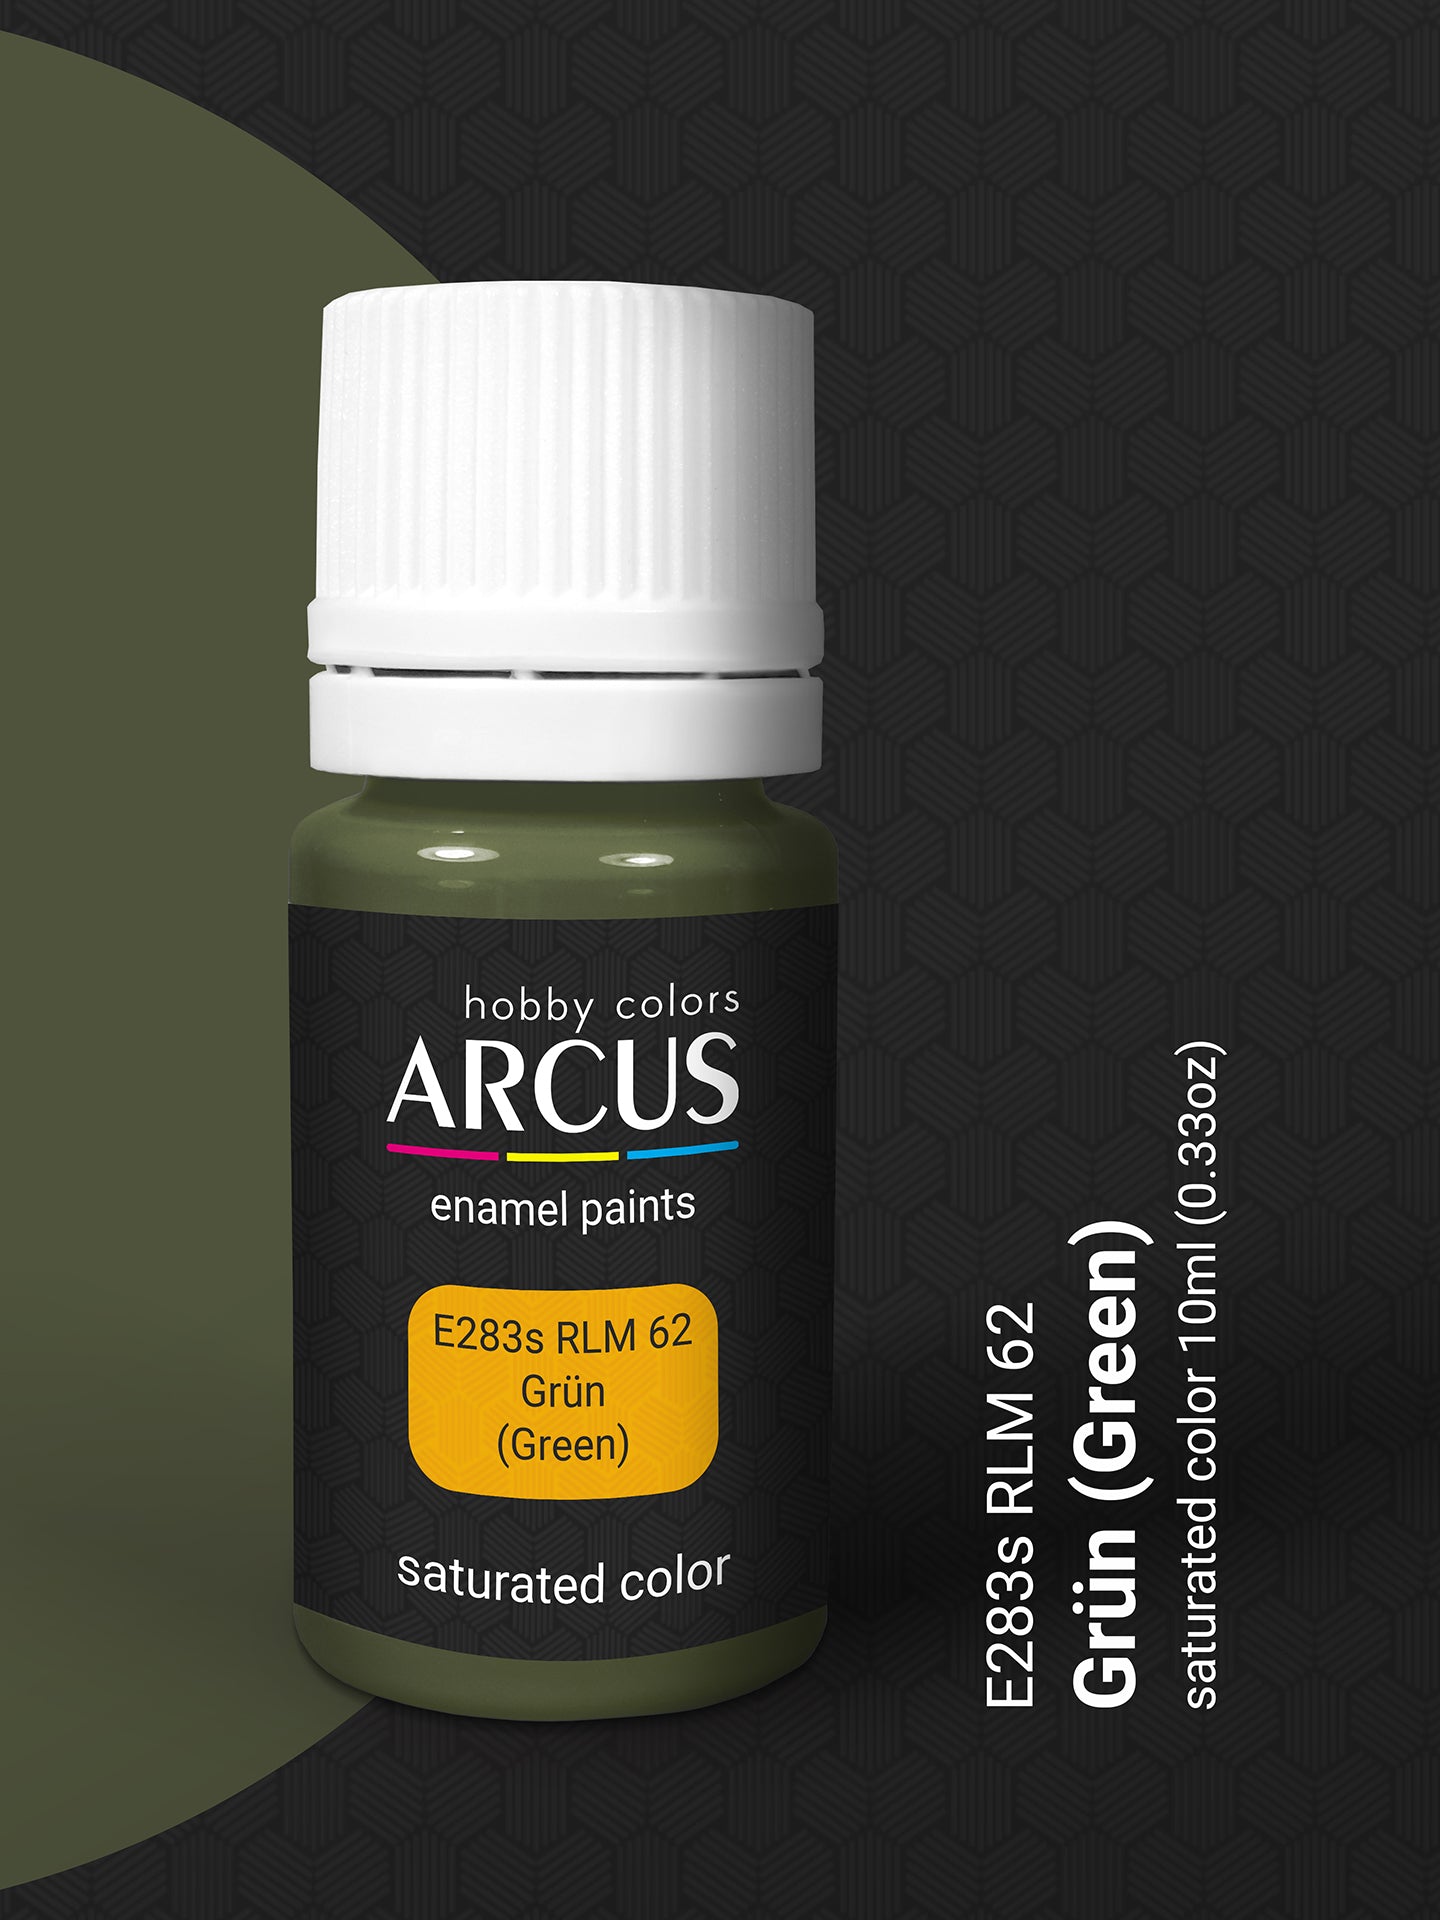 Arcus Hobby Colors, Model Paint